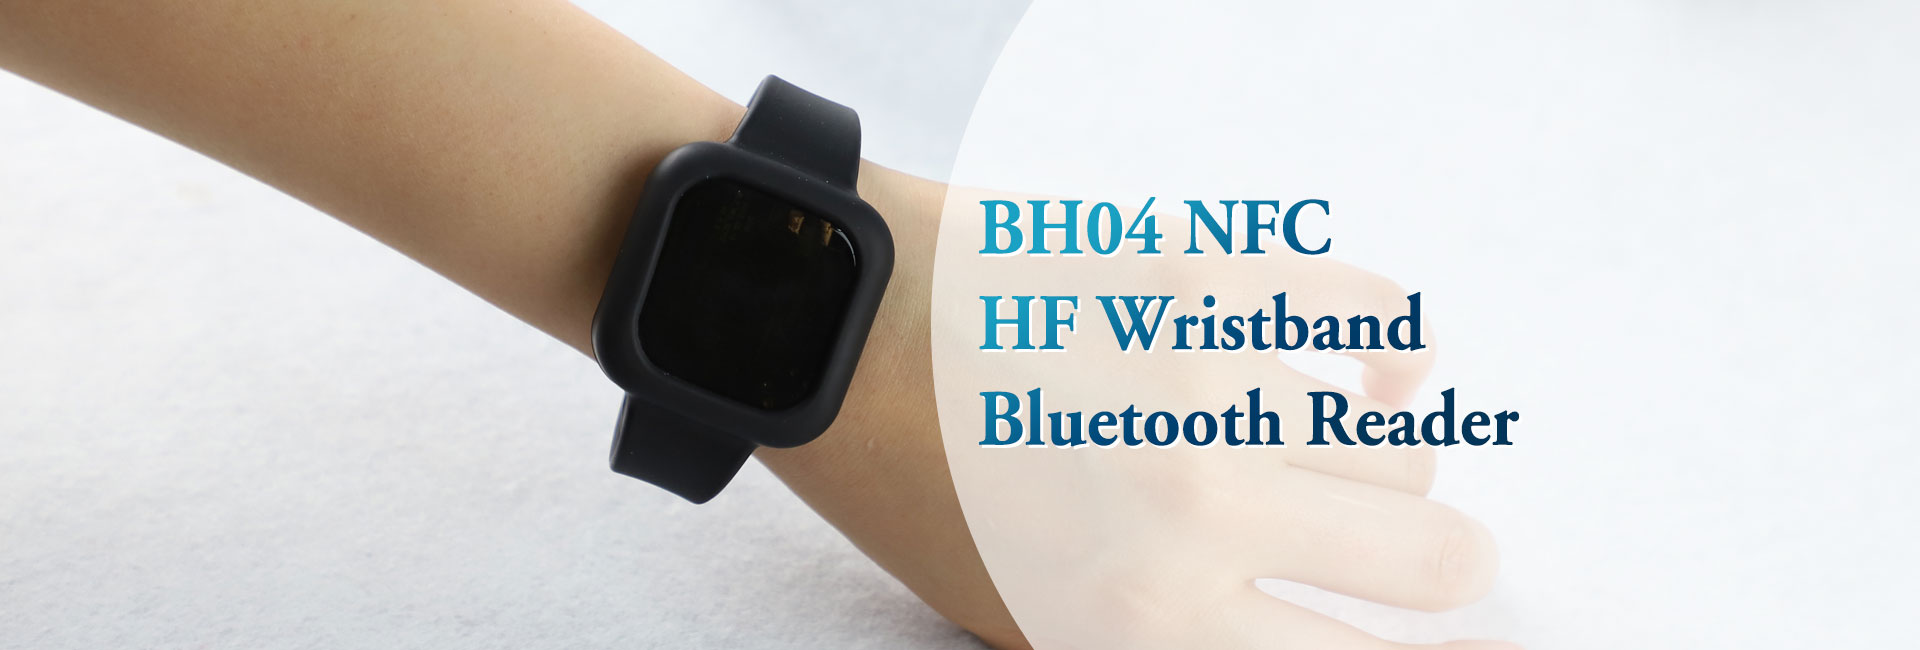 BH04 NFC高频腕带的客人etooth Reader